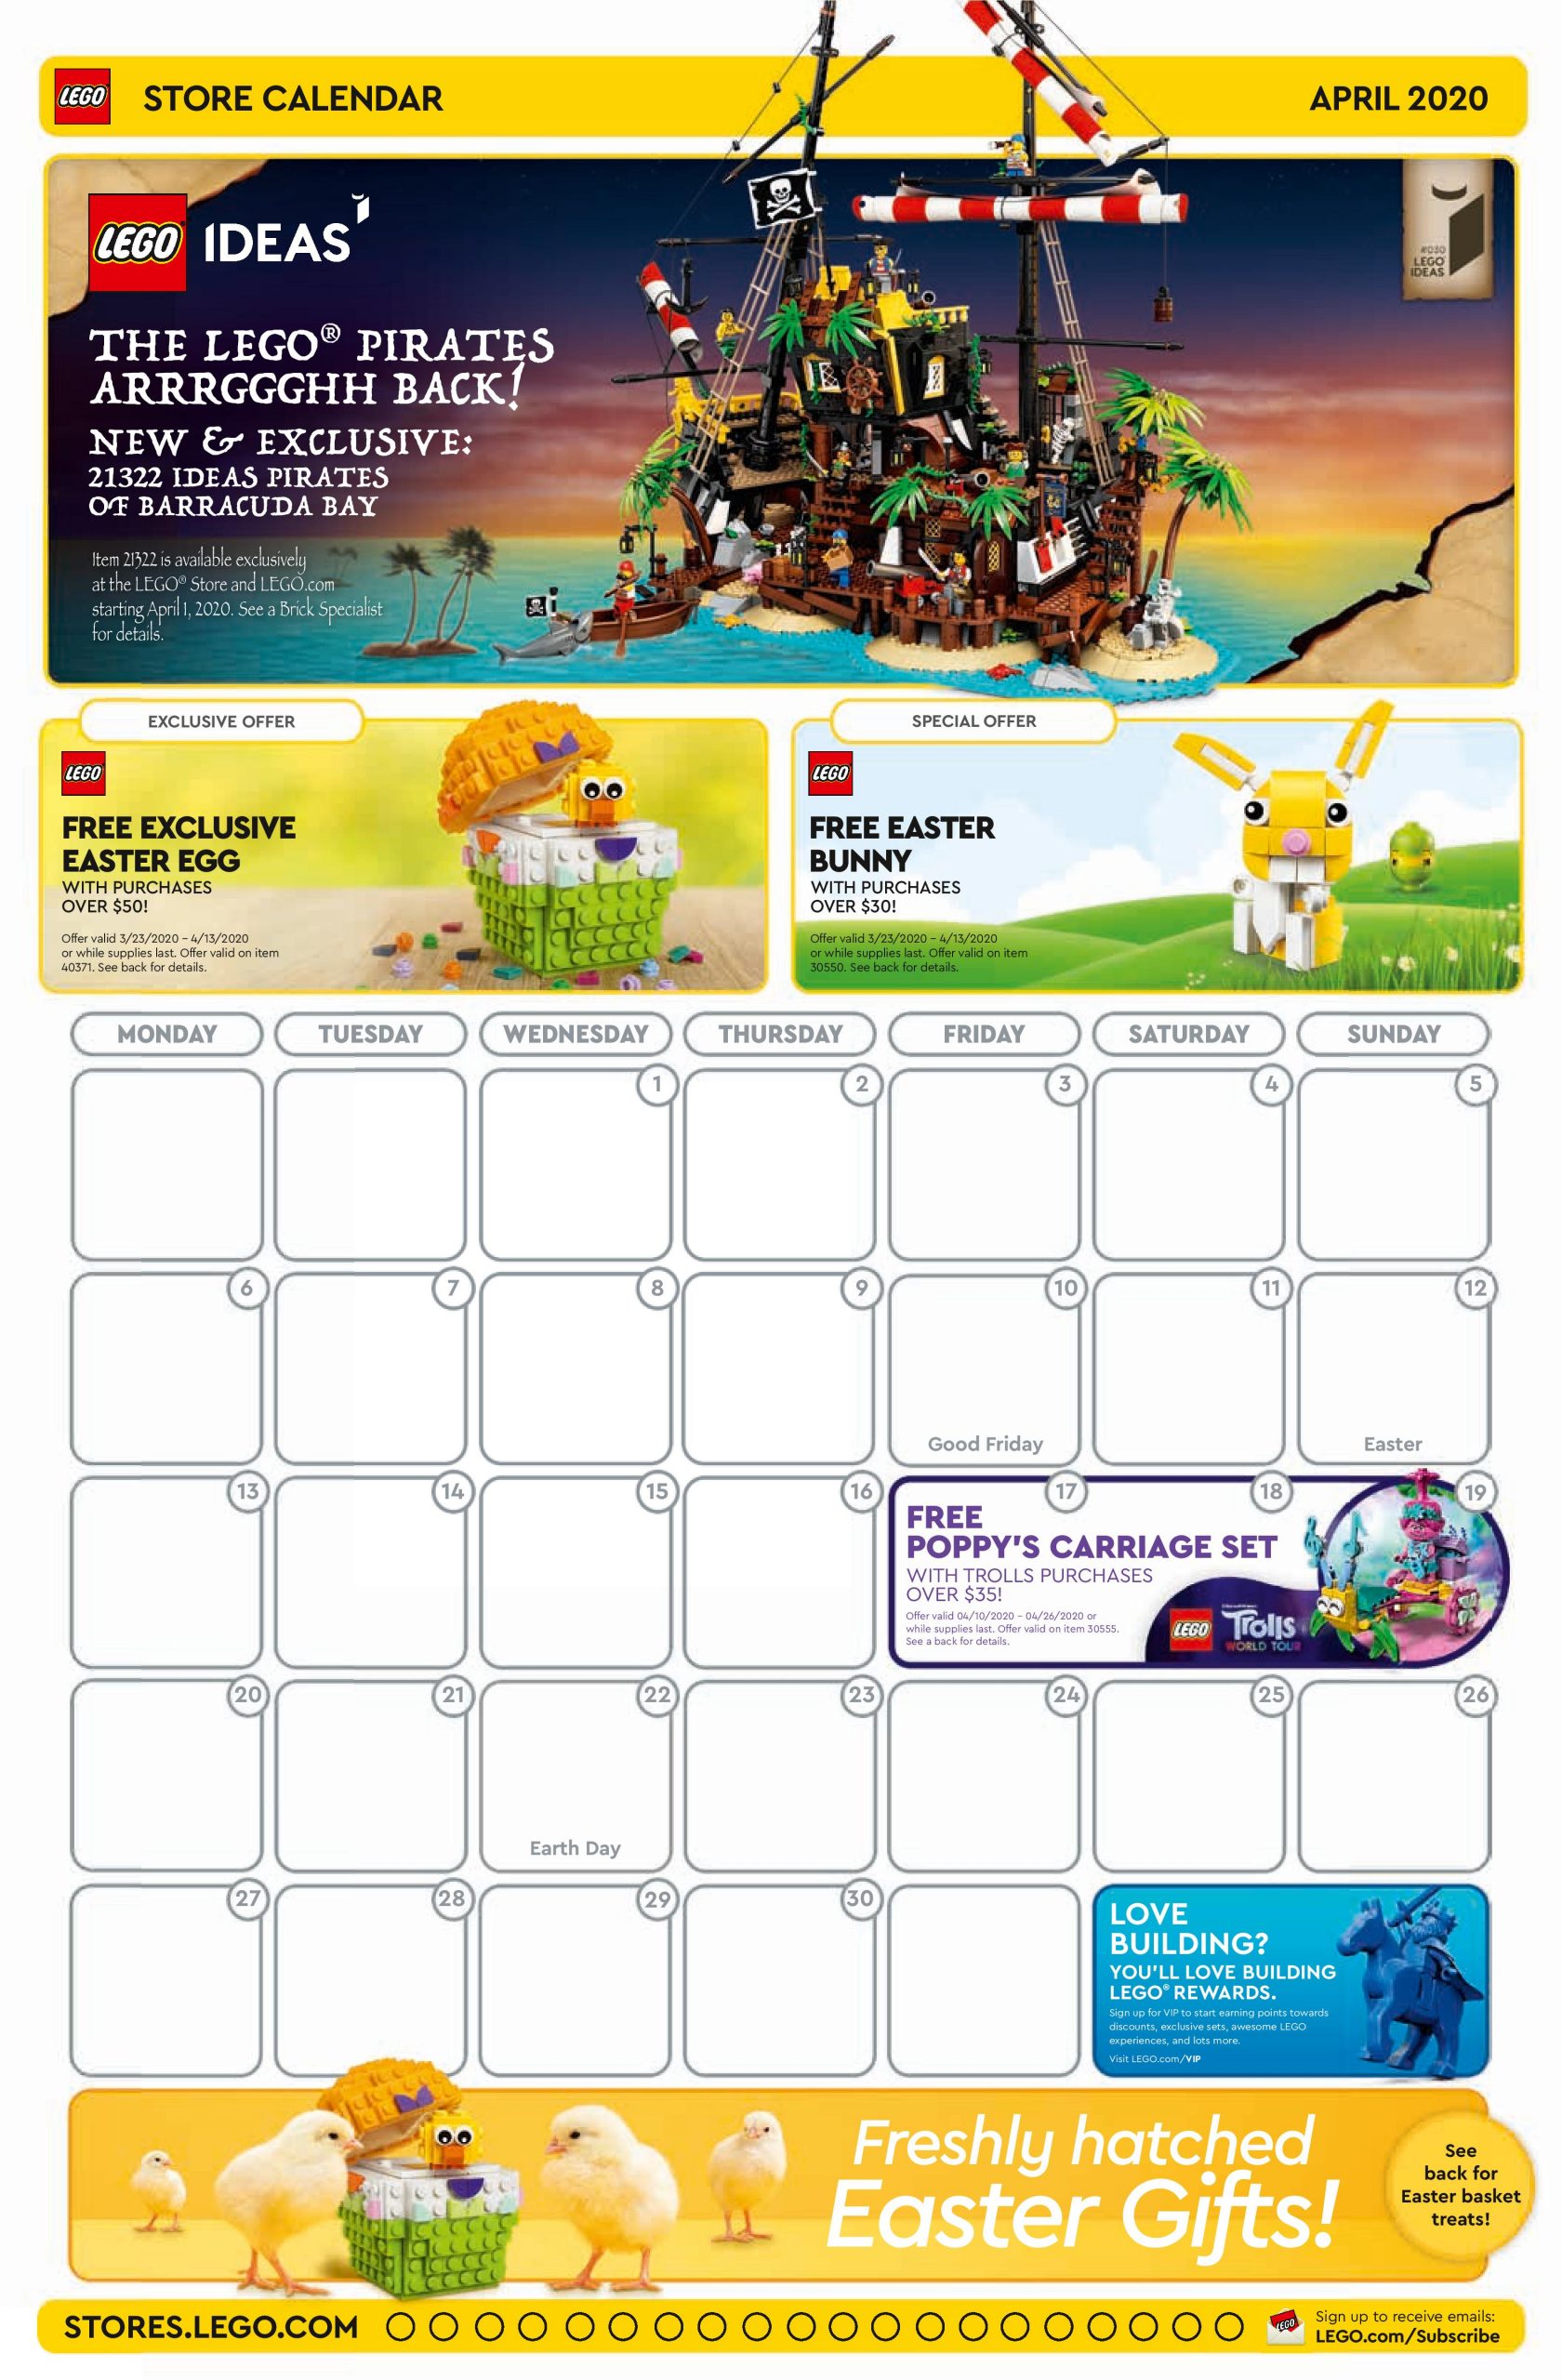 Lego April 2020 Store Calendar Promotions & Events - The Brick Fan